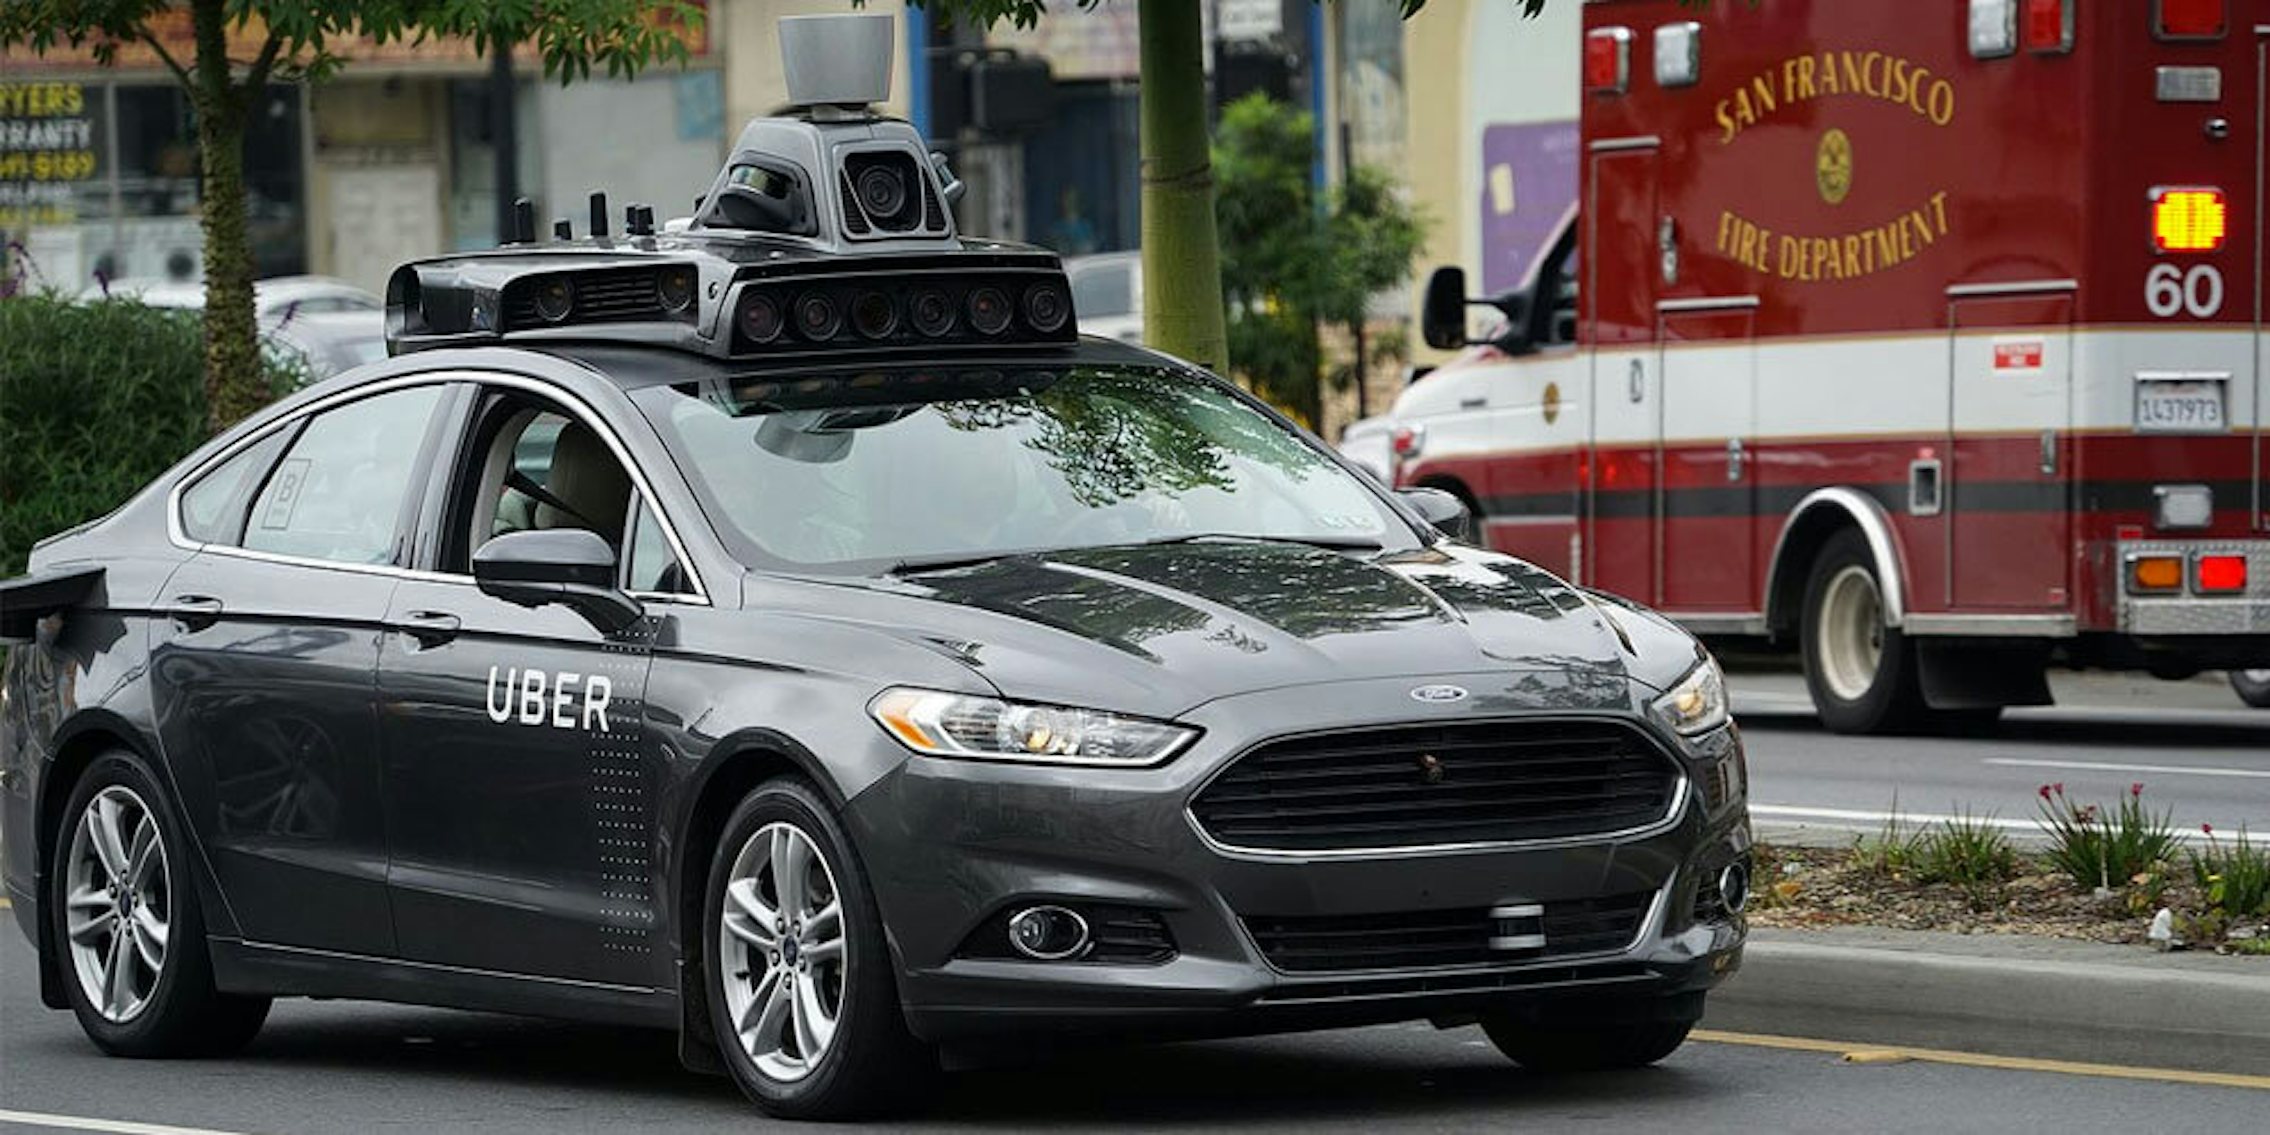 uber-self-driving-cars-jaywalkers